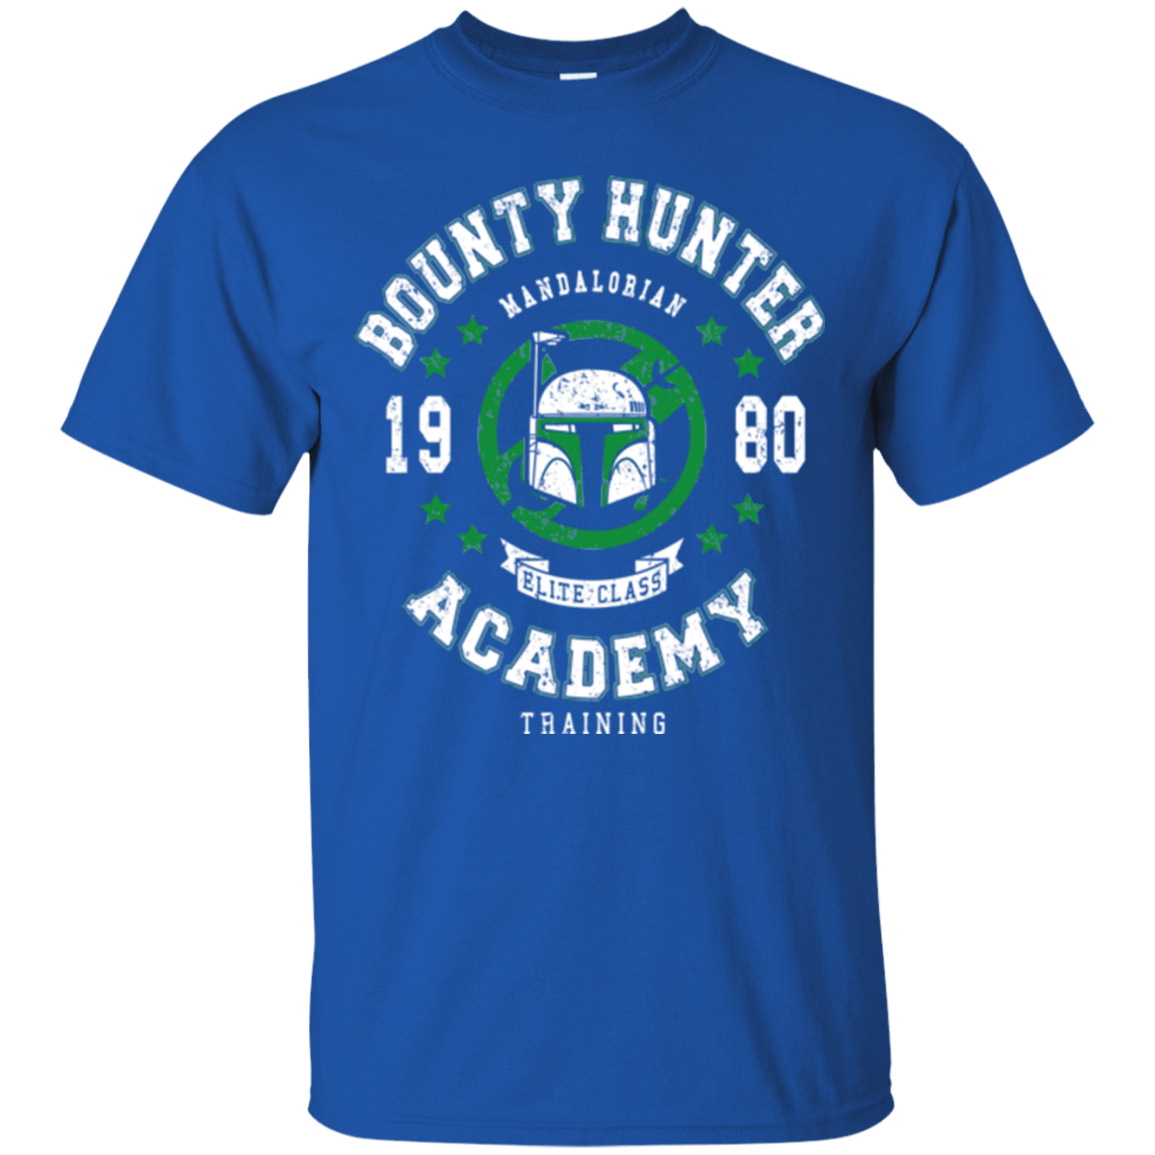 T-Shirts Royal / Small Bounty Hunter Academy 80 T-Shirt